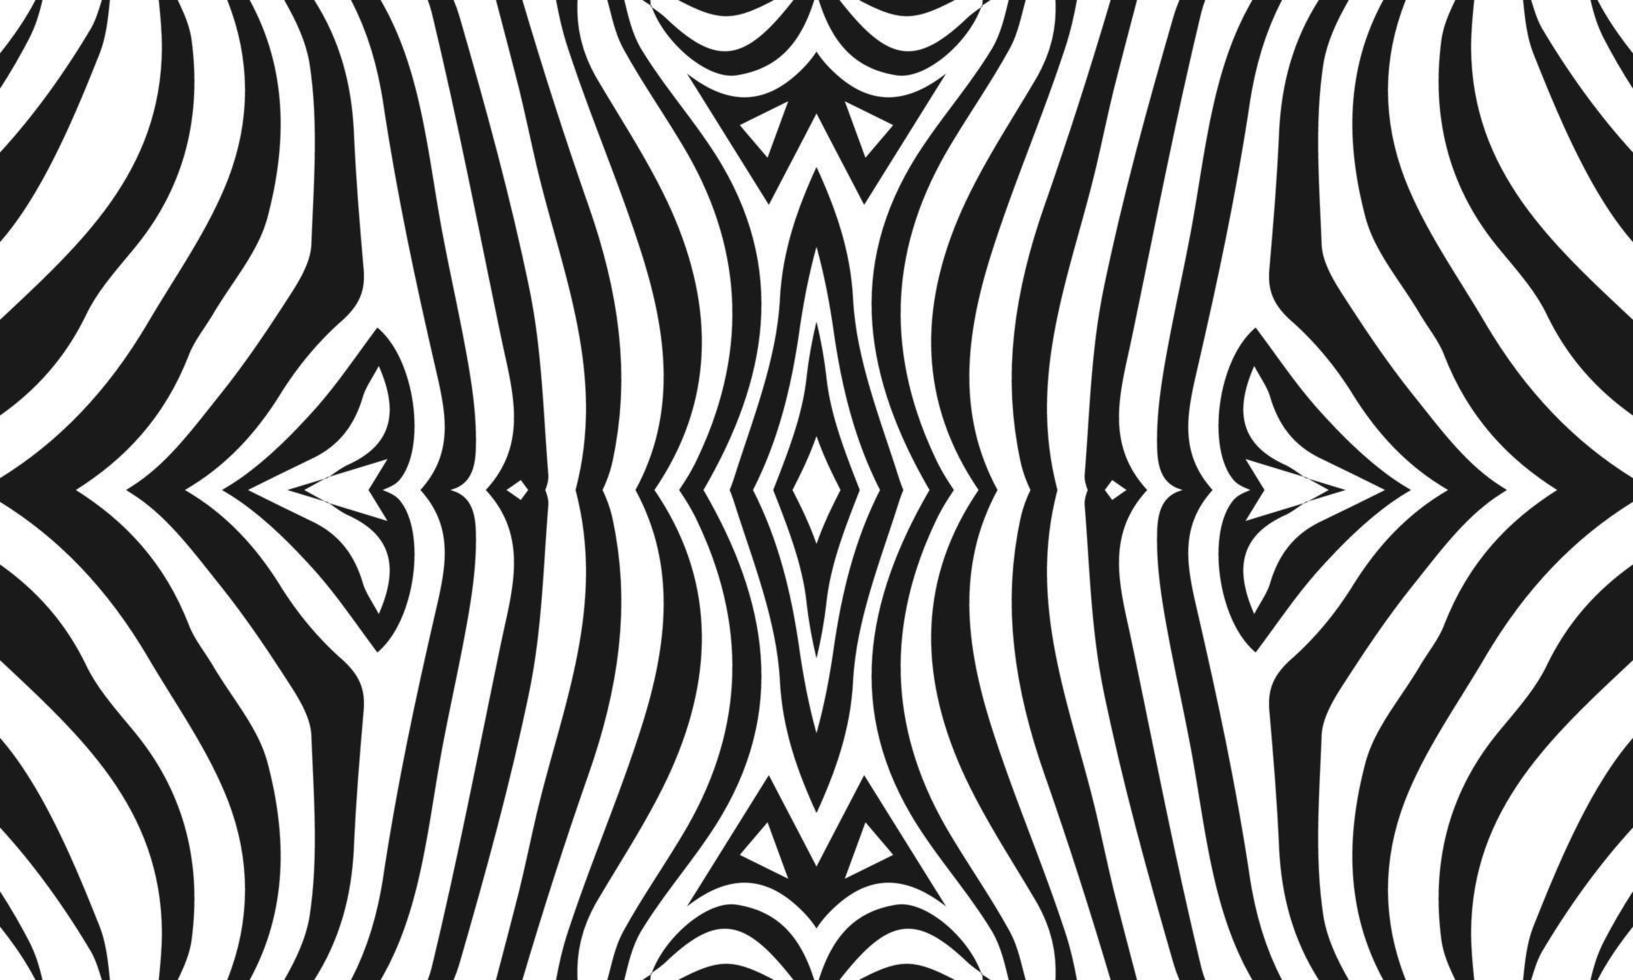 Hand drawn zebra print pattern background vector